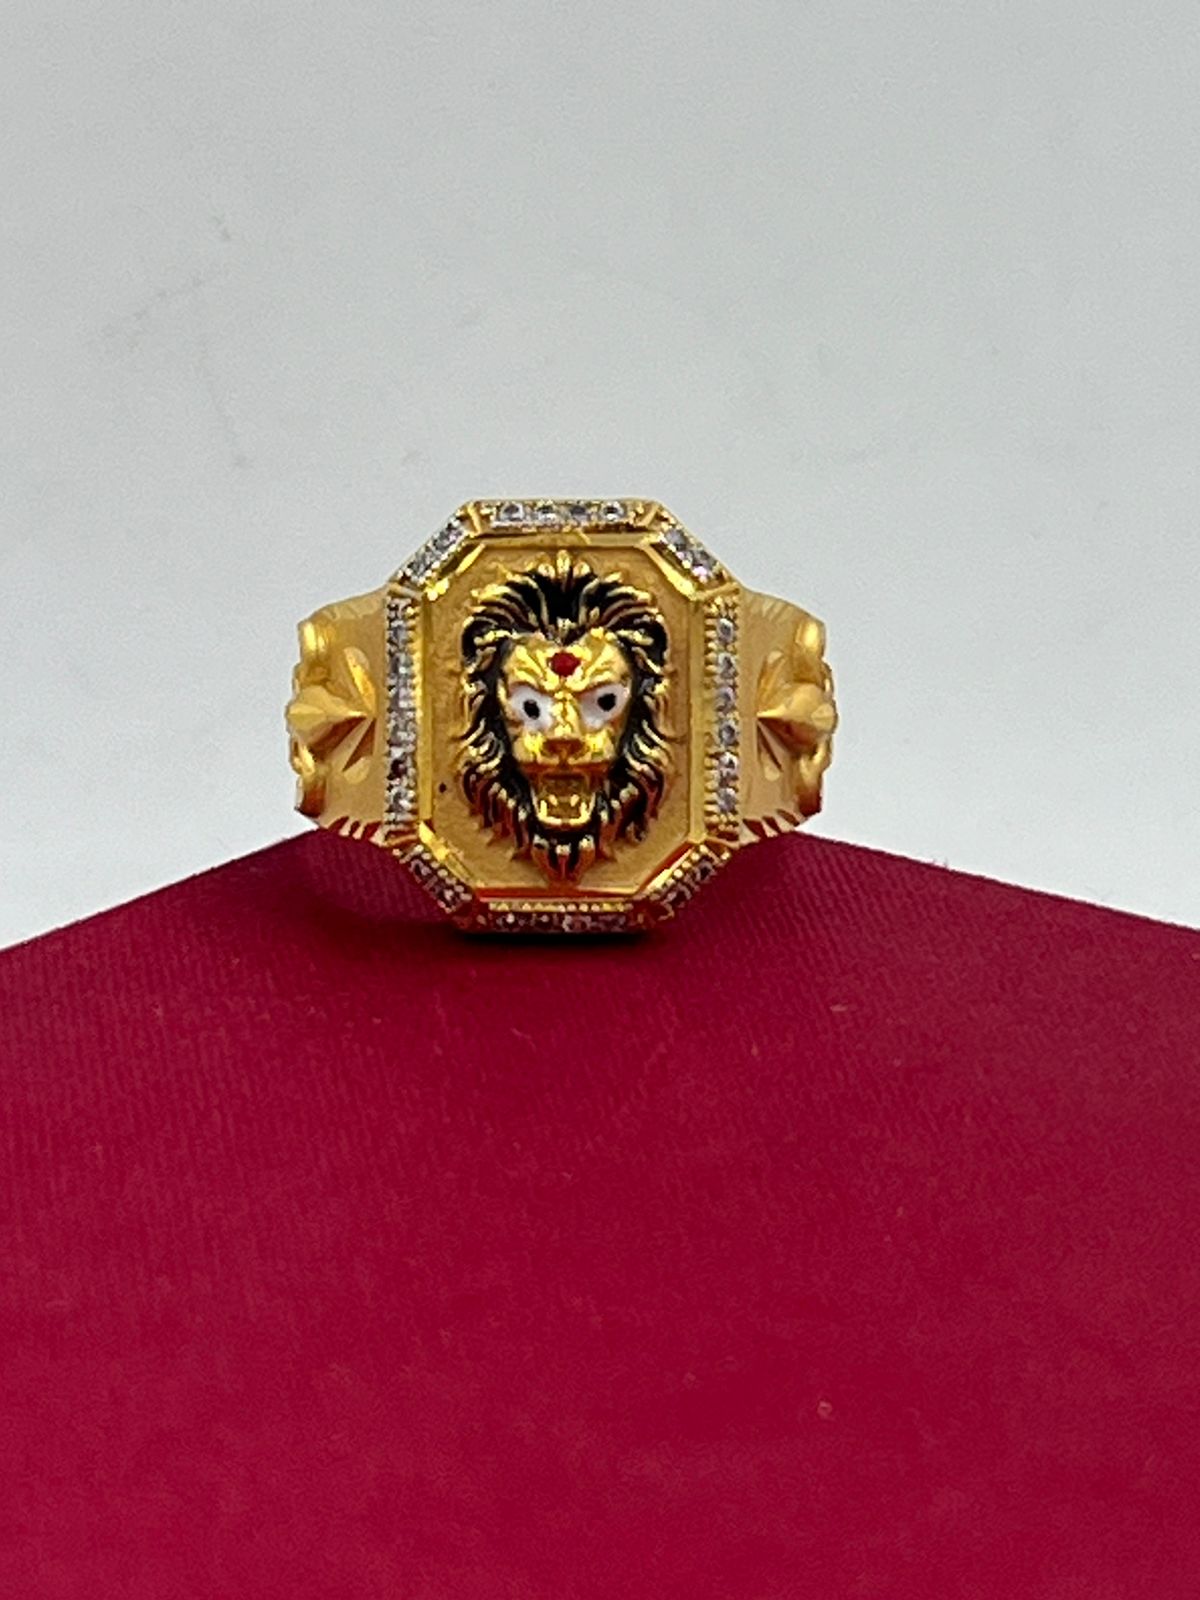 1 Gram Gold Plated Lion With Diamond Delicate Design Ring For Men - Style  B176, सोने का पानी चढ़ी हुई अंगूठी - Soni Fashion, Rajkot | ID:  2849969390097